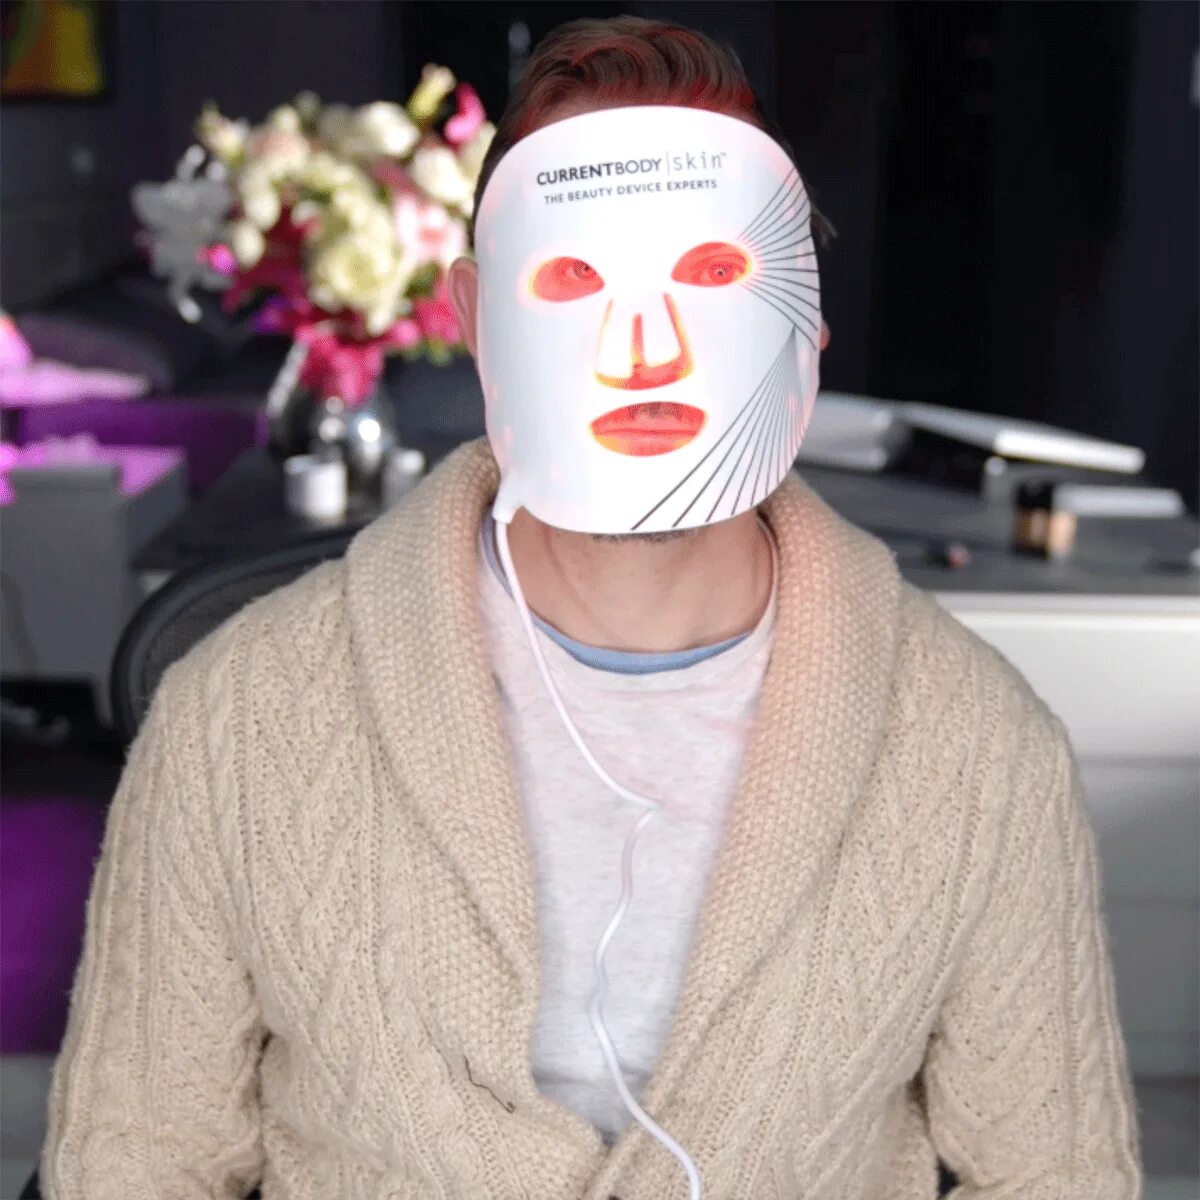 CURRENTBODY Skin led маска. Маска CURRENTBODY Skin led Light Therapy. Маска current body led. CURRENTBODY Skin led Light Therapy face Mask.